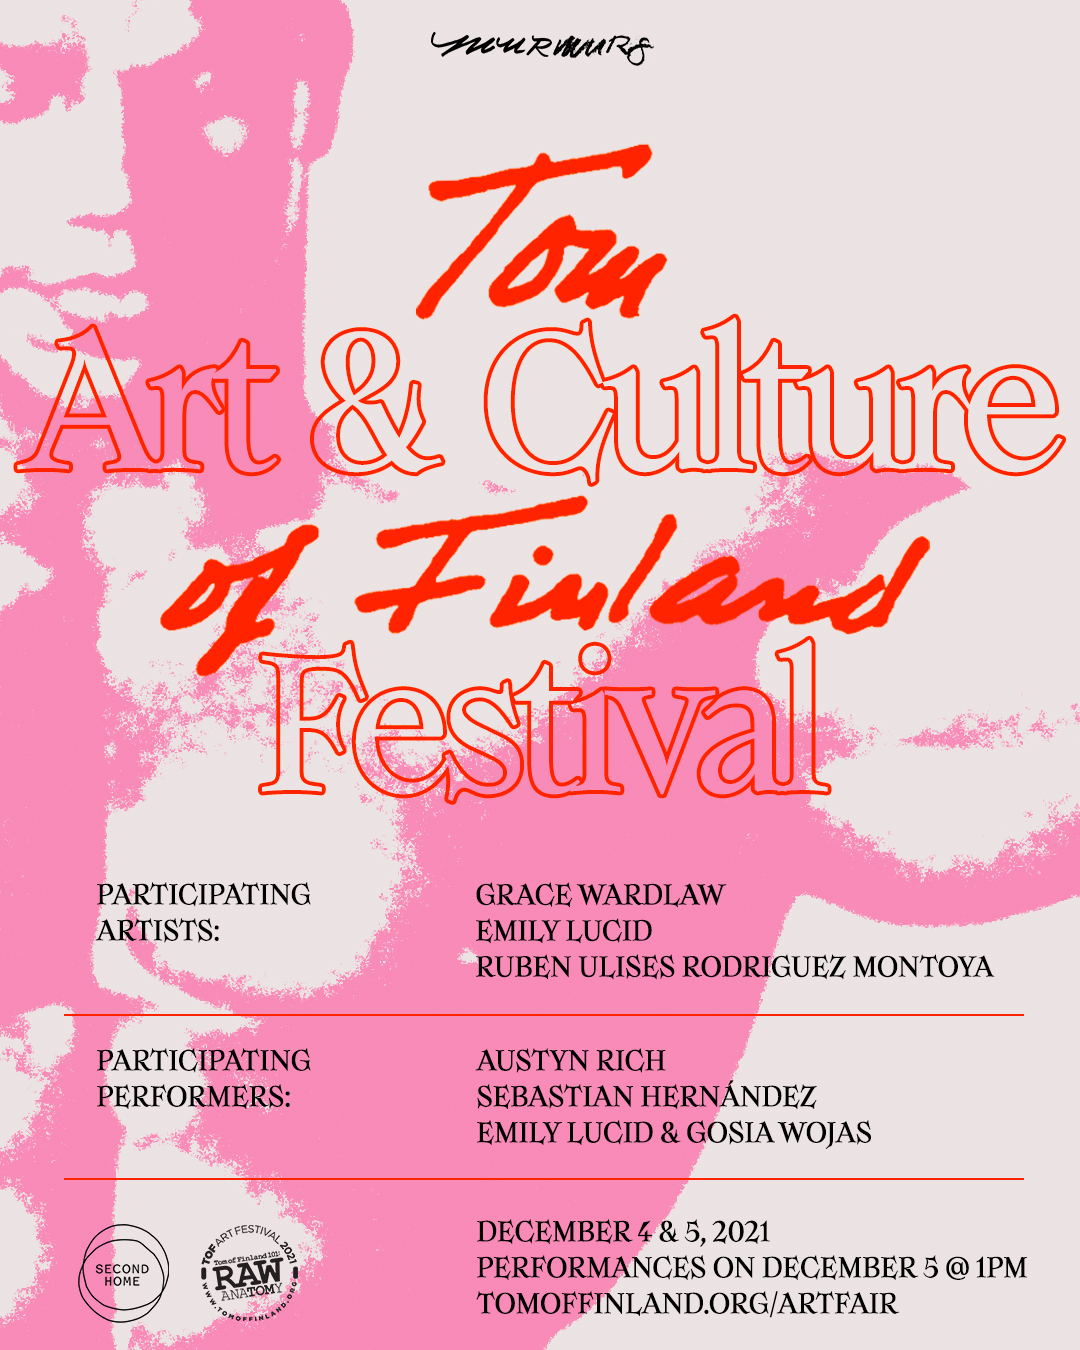 Tom of Finland Art Fair - Murmurs